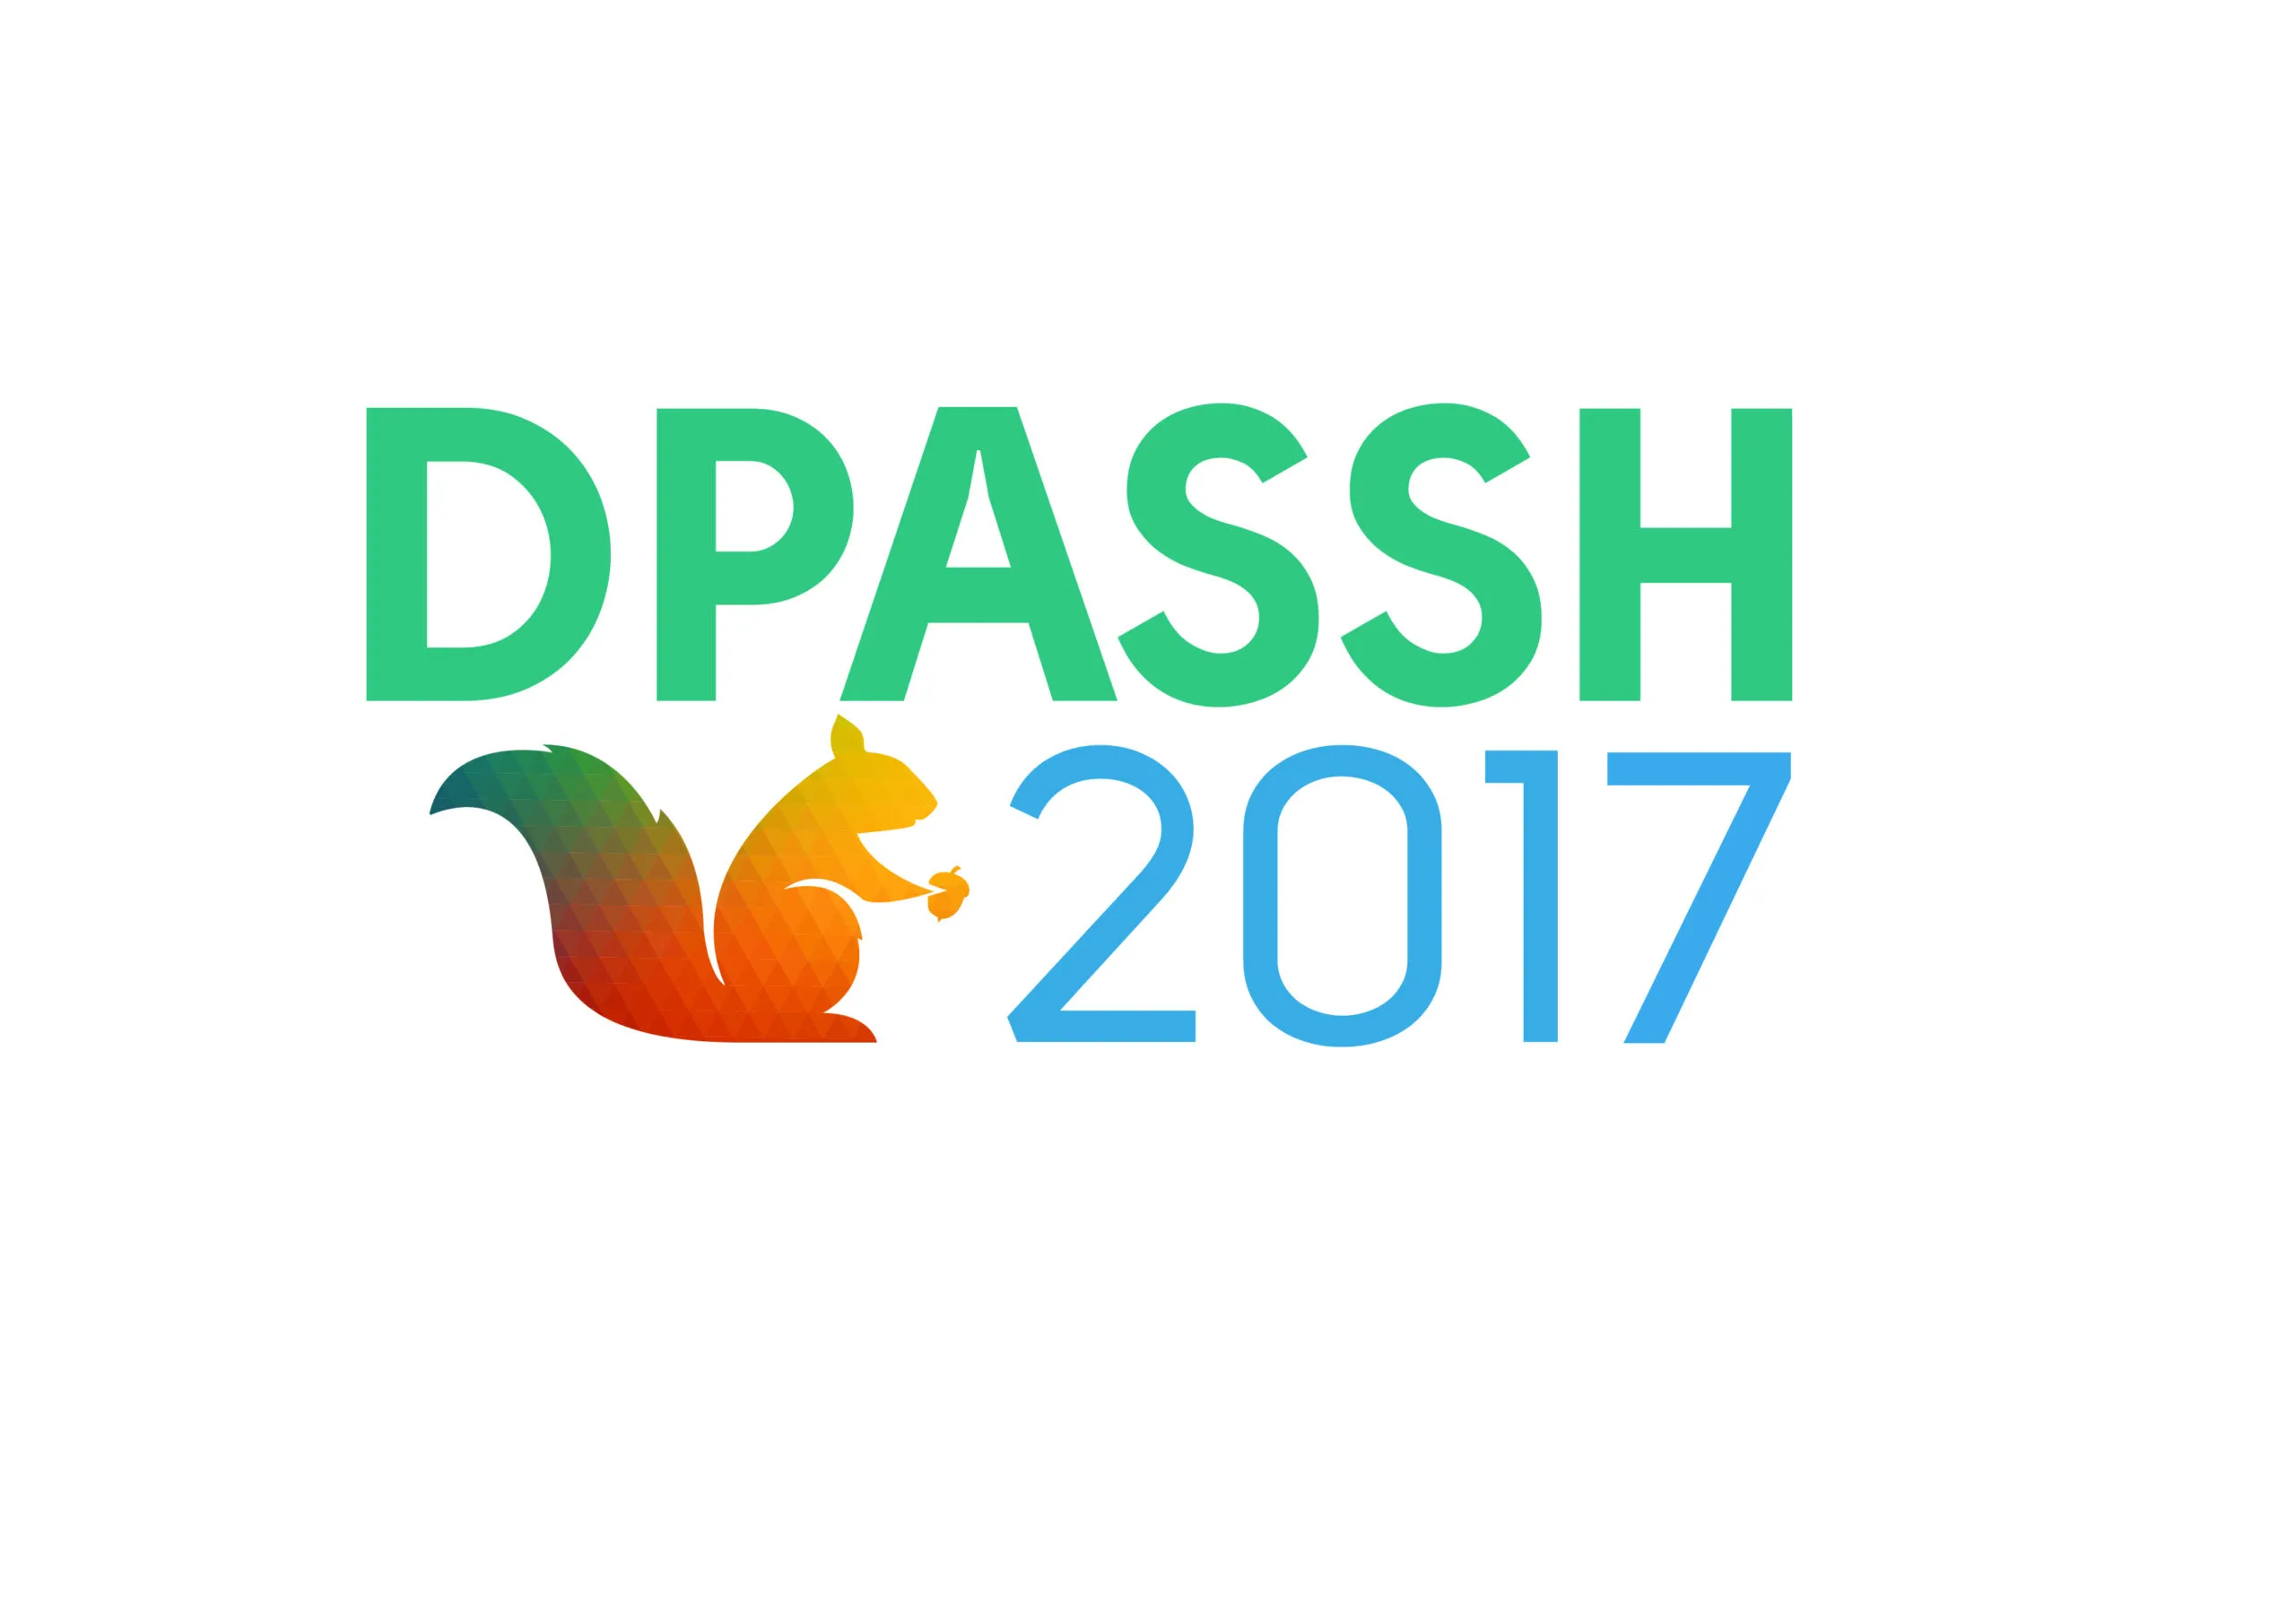 DPASSH 2017 logo